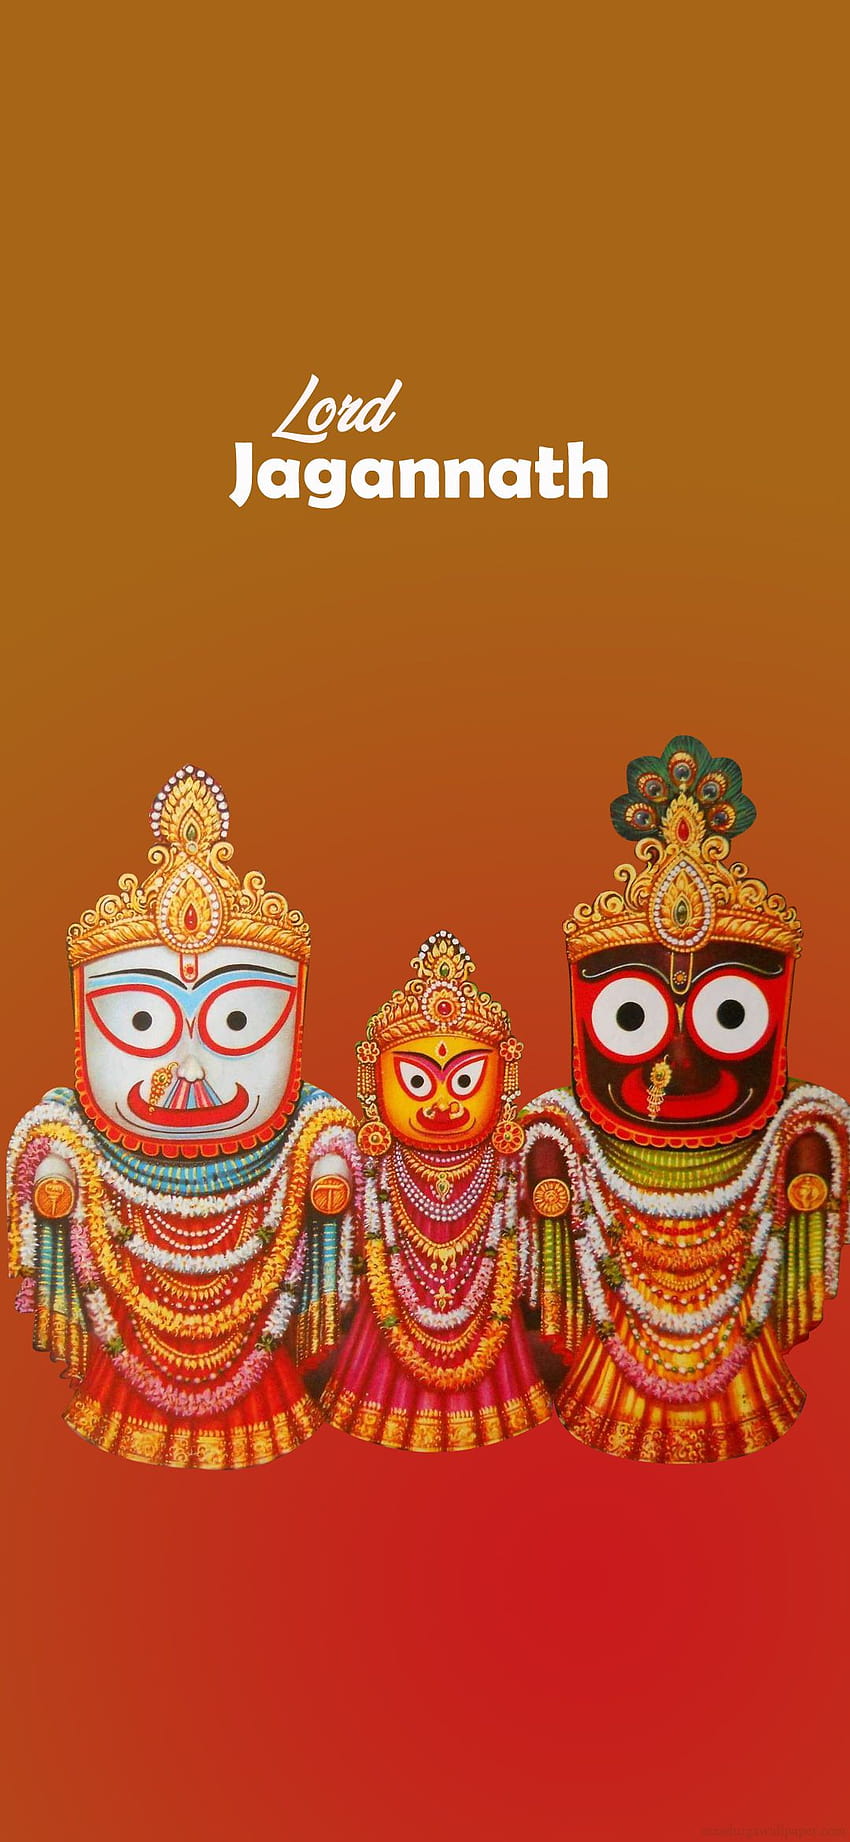 Lord Jagannath for mobile, shree jagannath mobile HD phone wallpaper